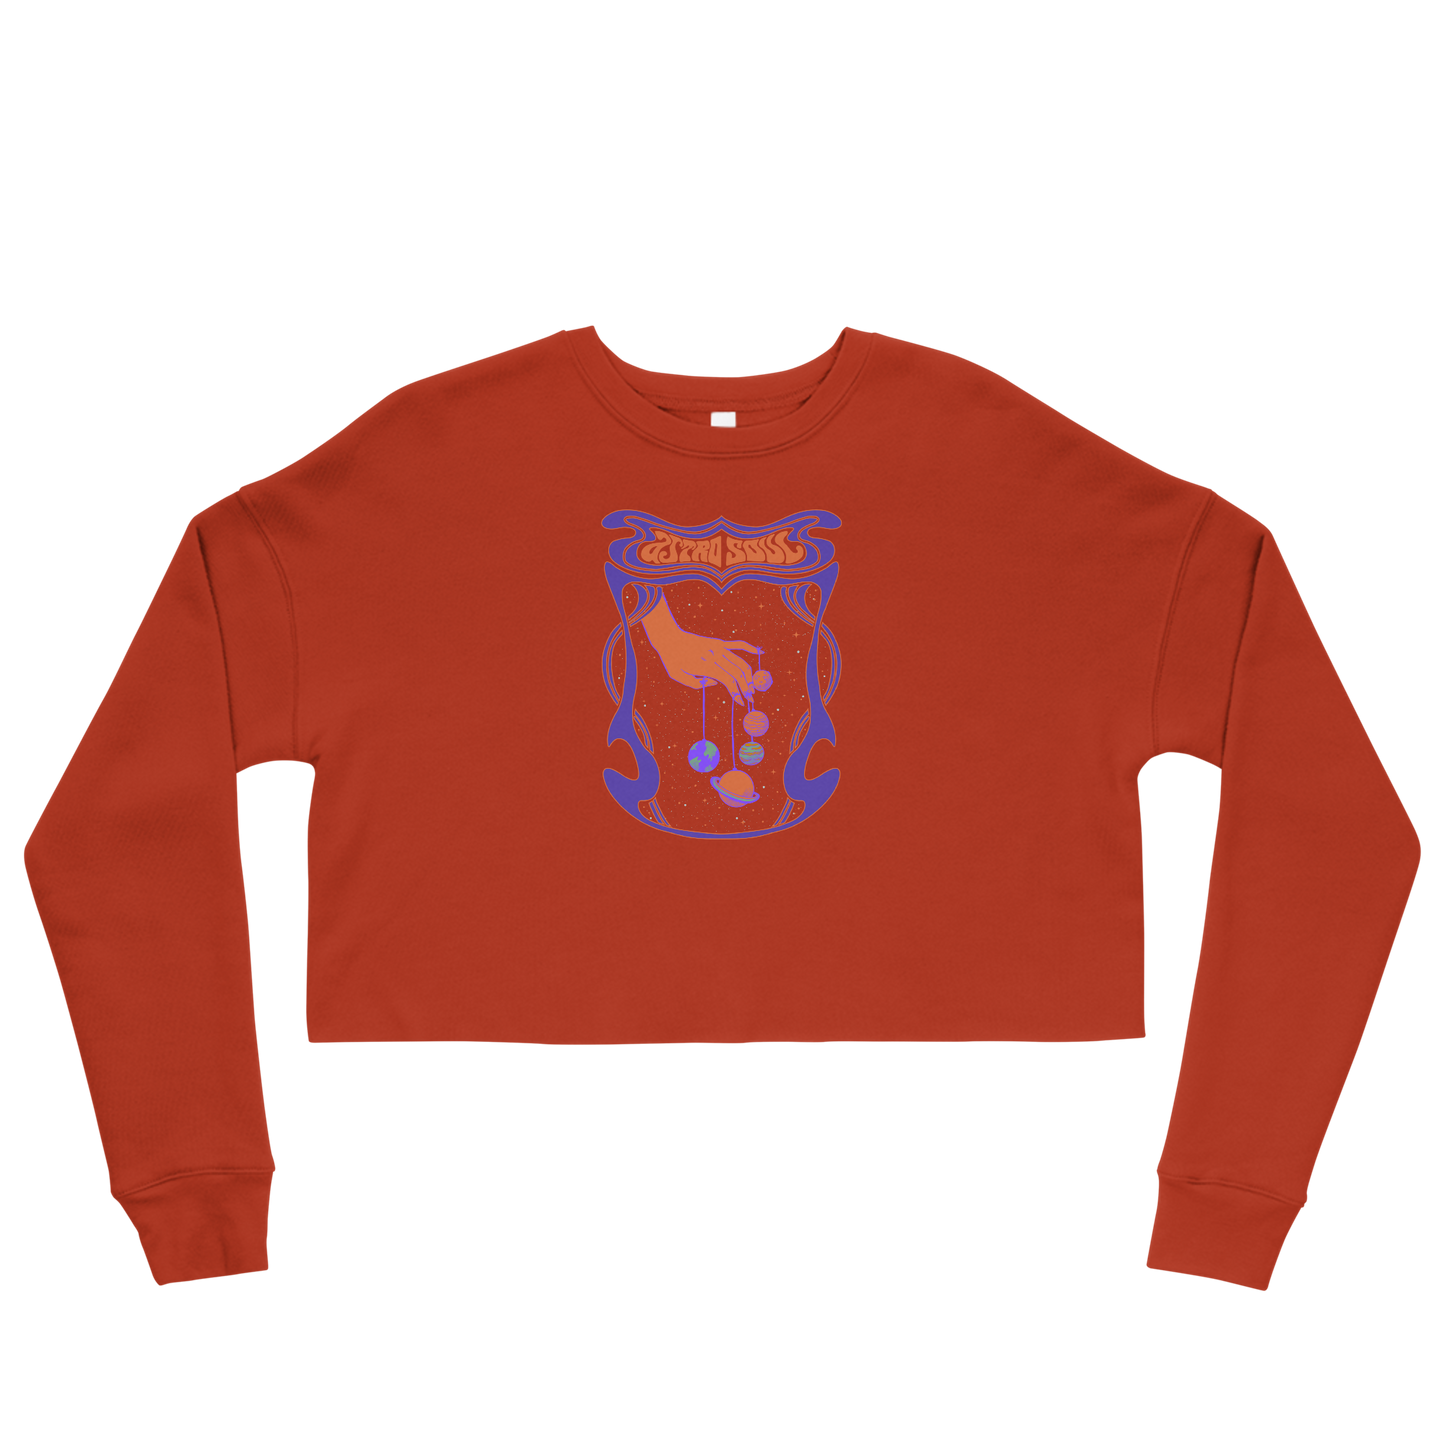 Astro Soul Graphic Crop Sweatshirt